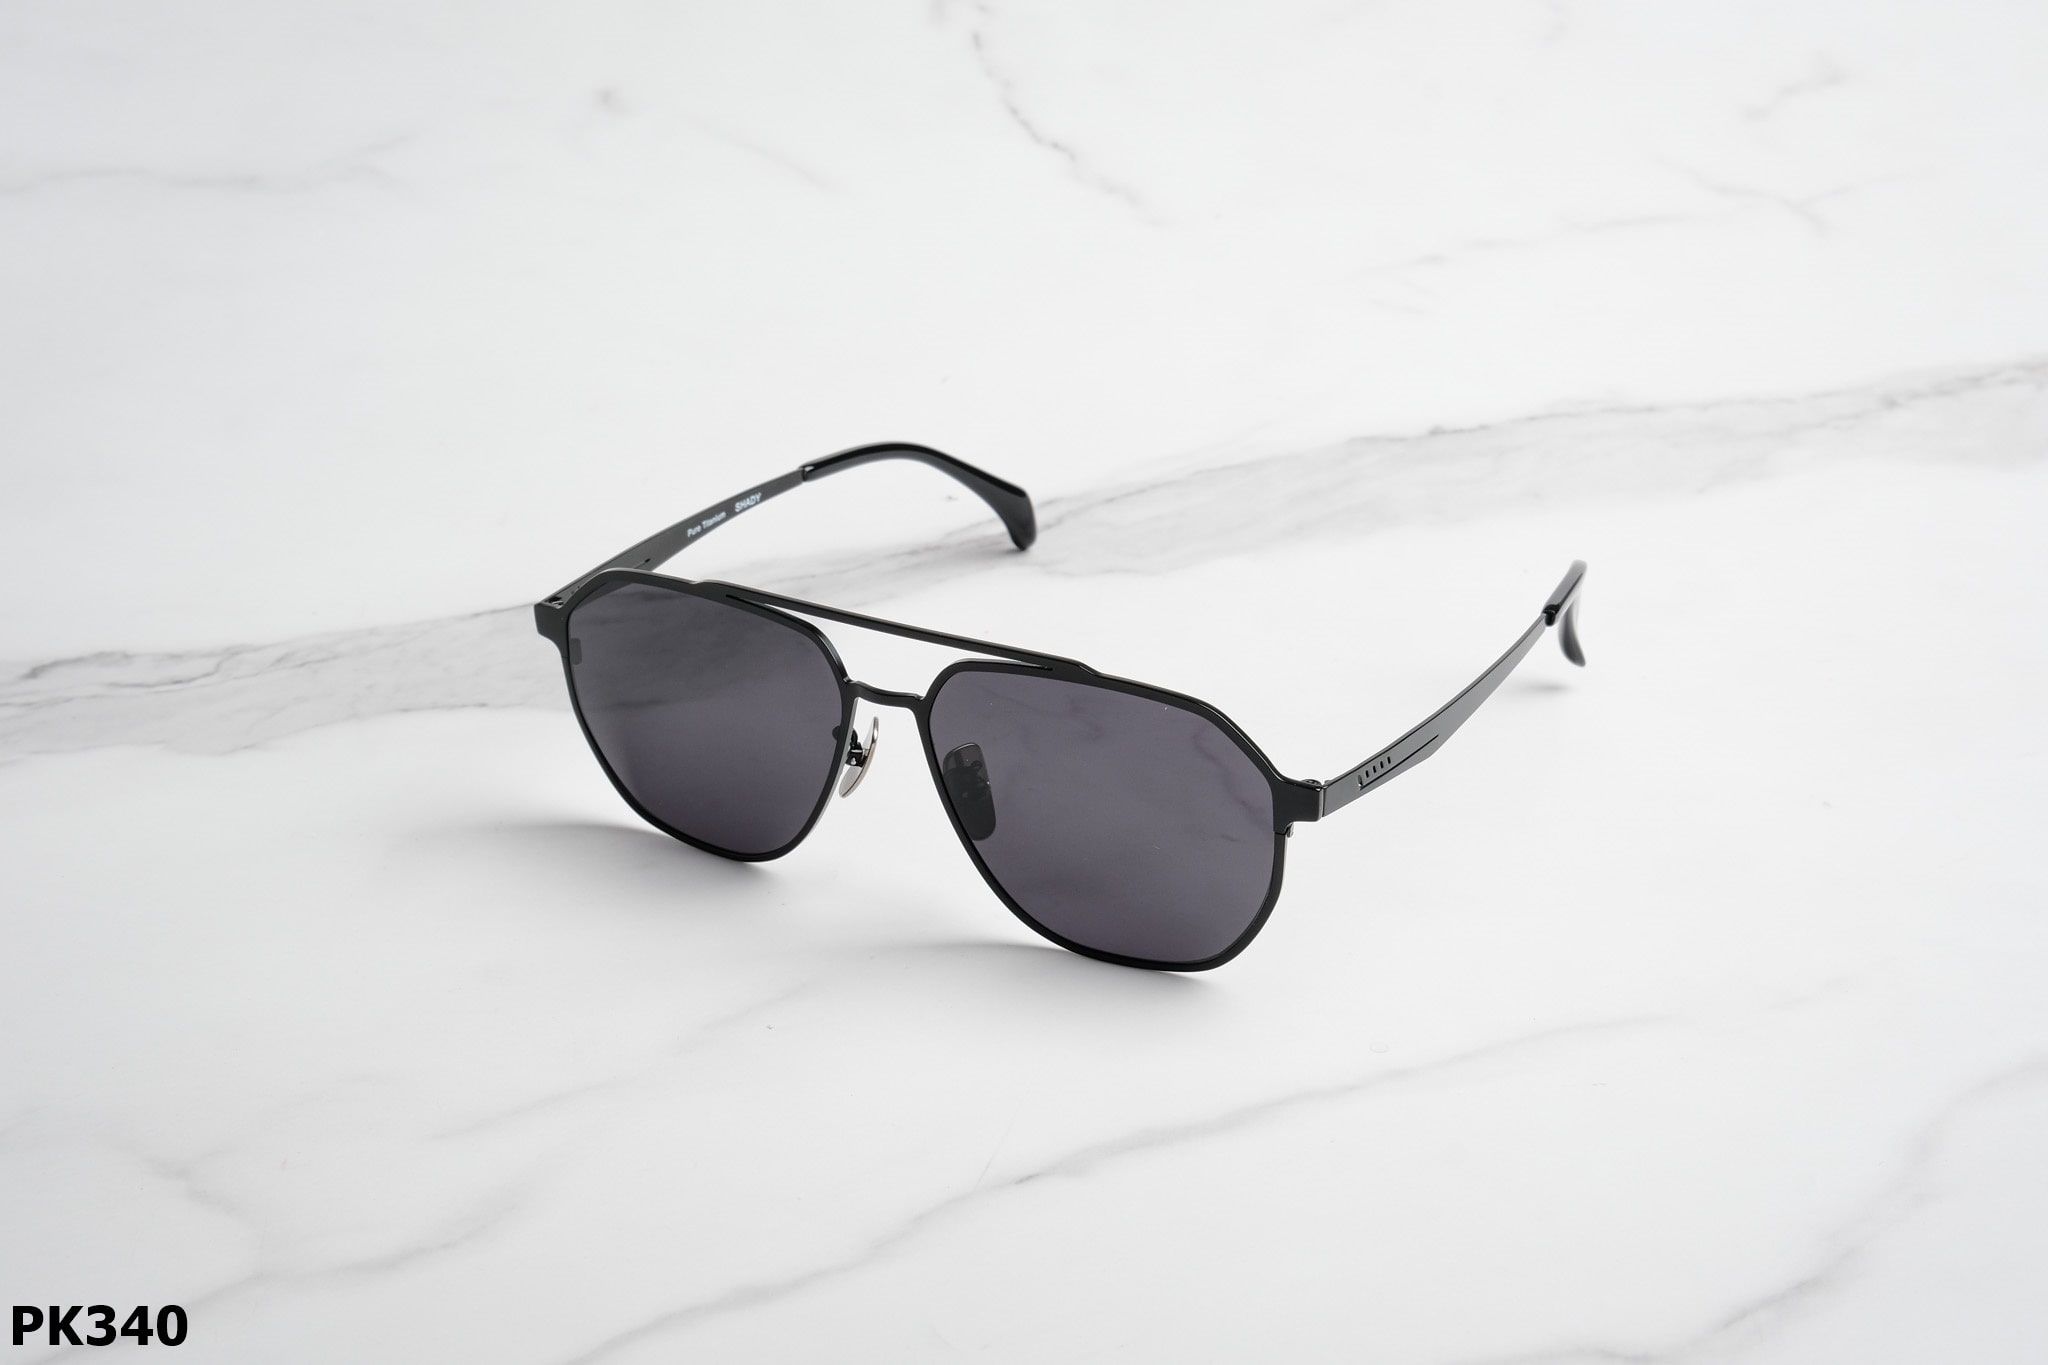  SHADY Eyewear - Sunglasses - PK340 